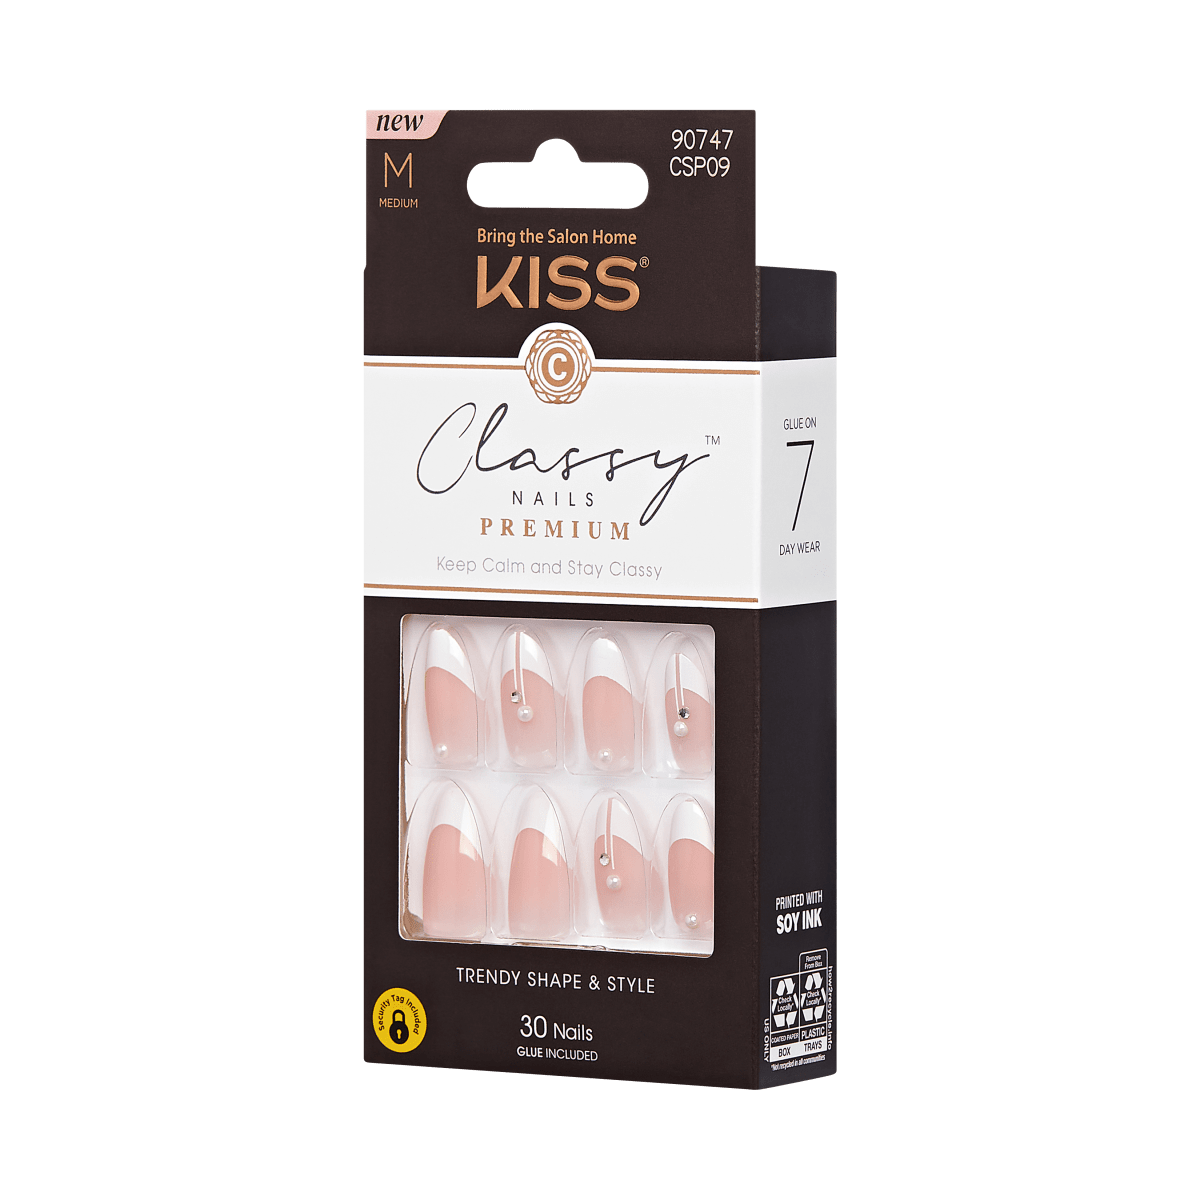 KISS Premium Classy Nails - Highlights